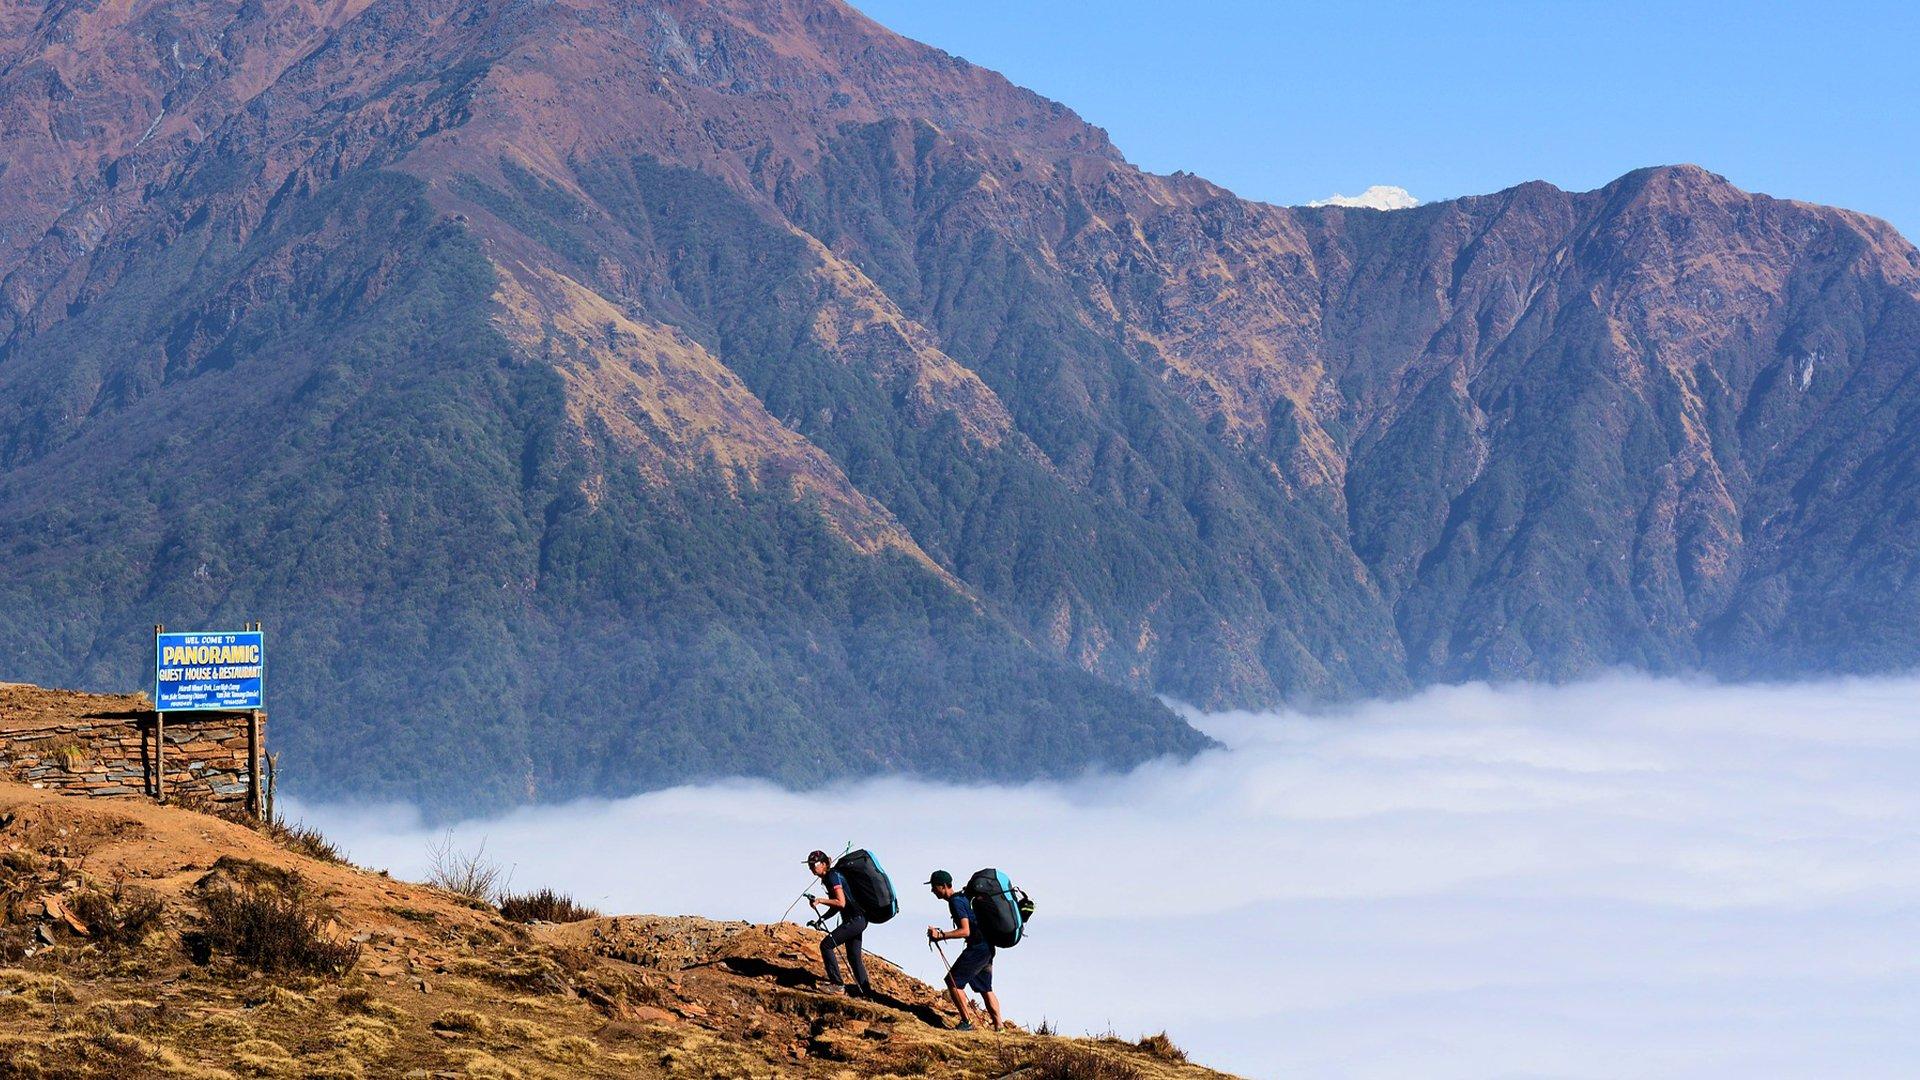 OutdoorLads will be trekking in the Annapurna mountain range in 2021